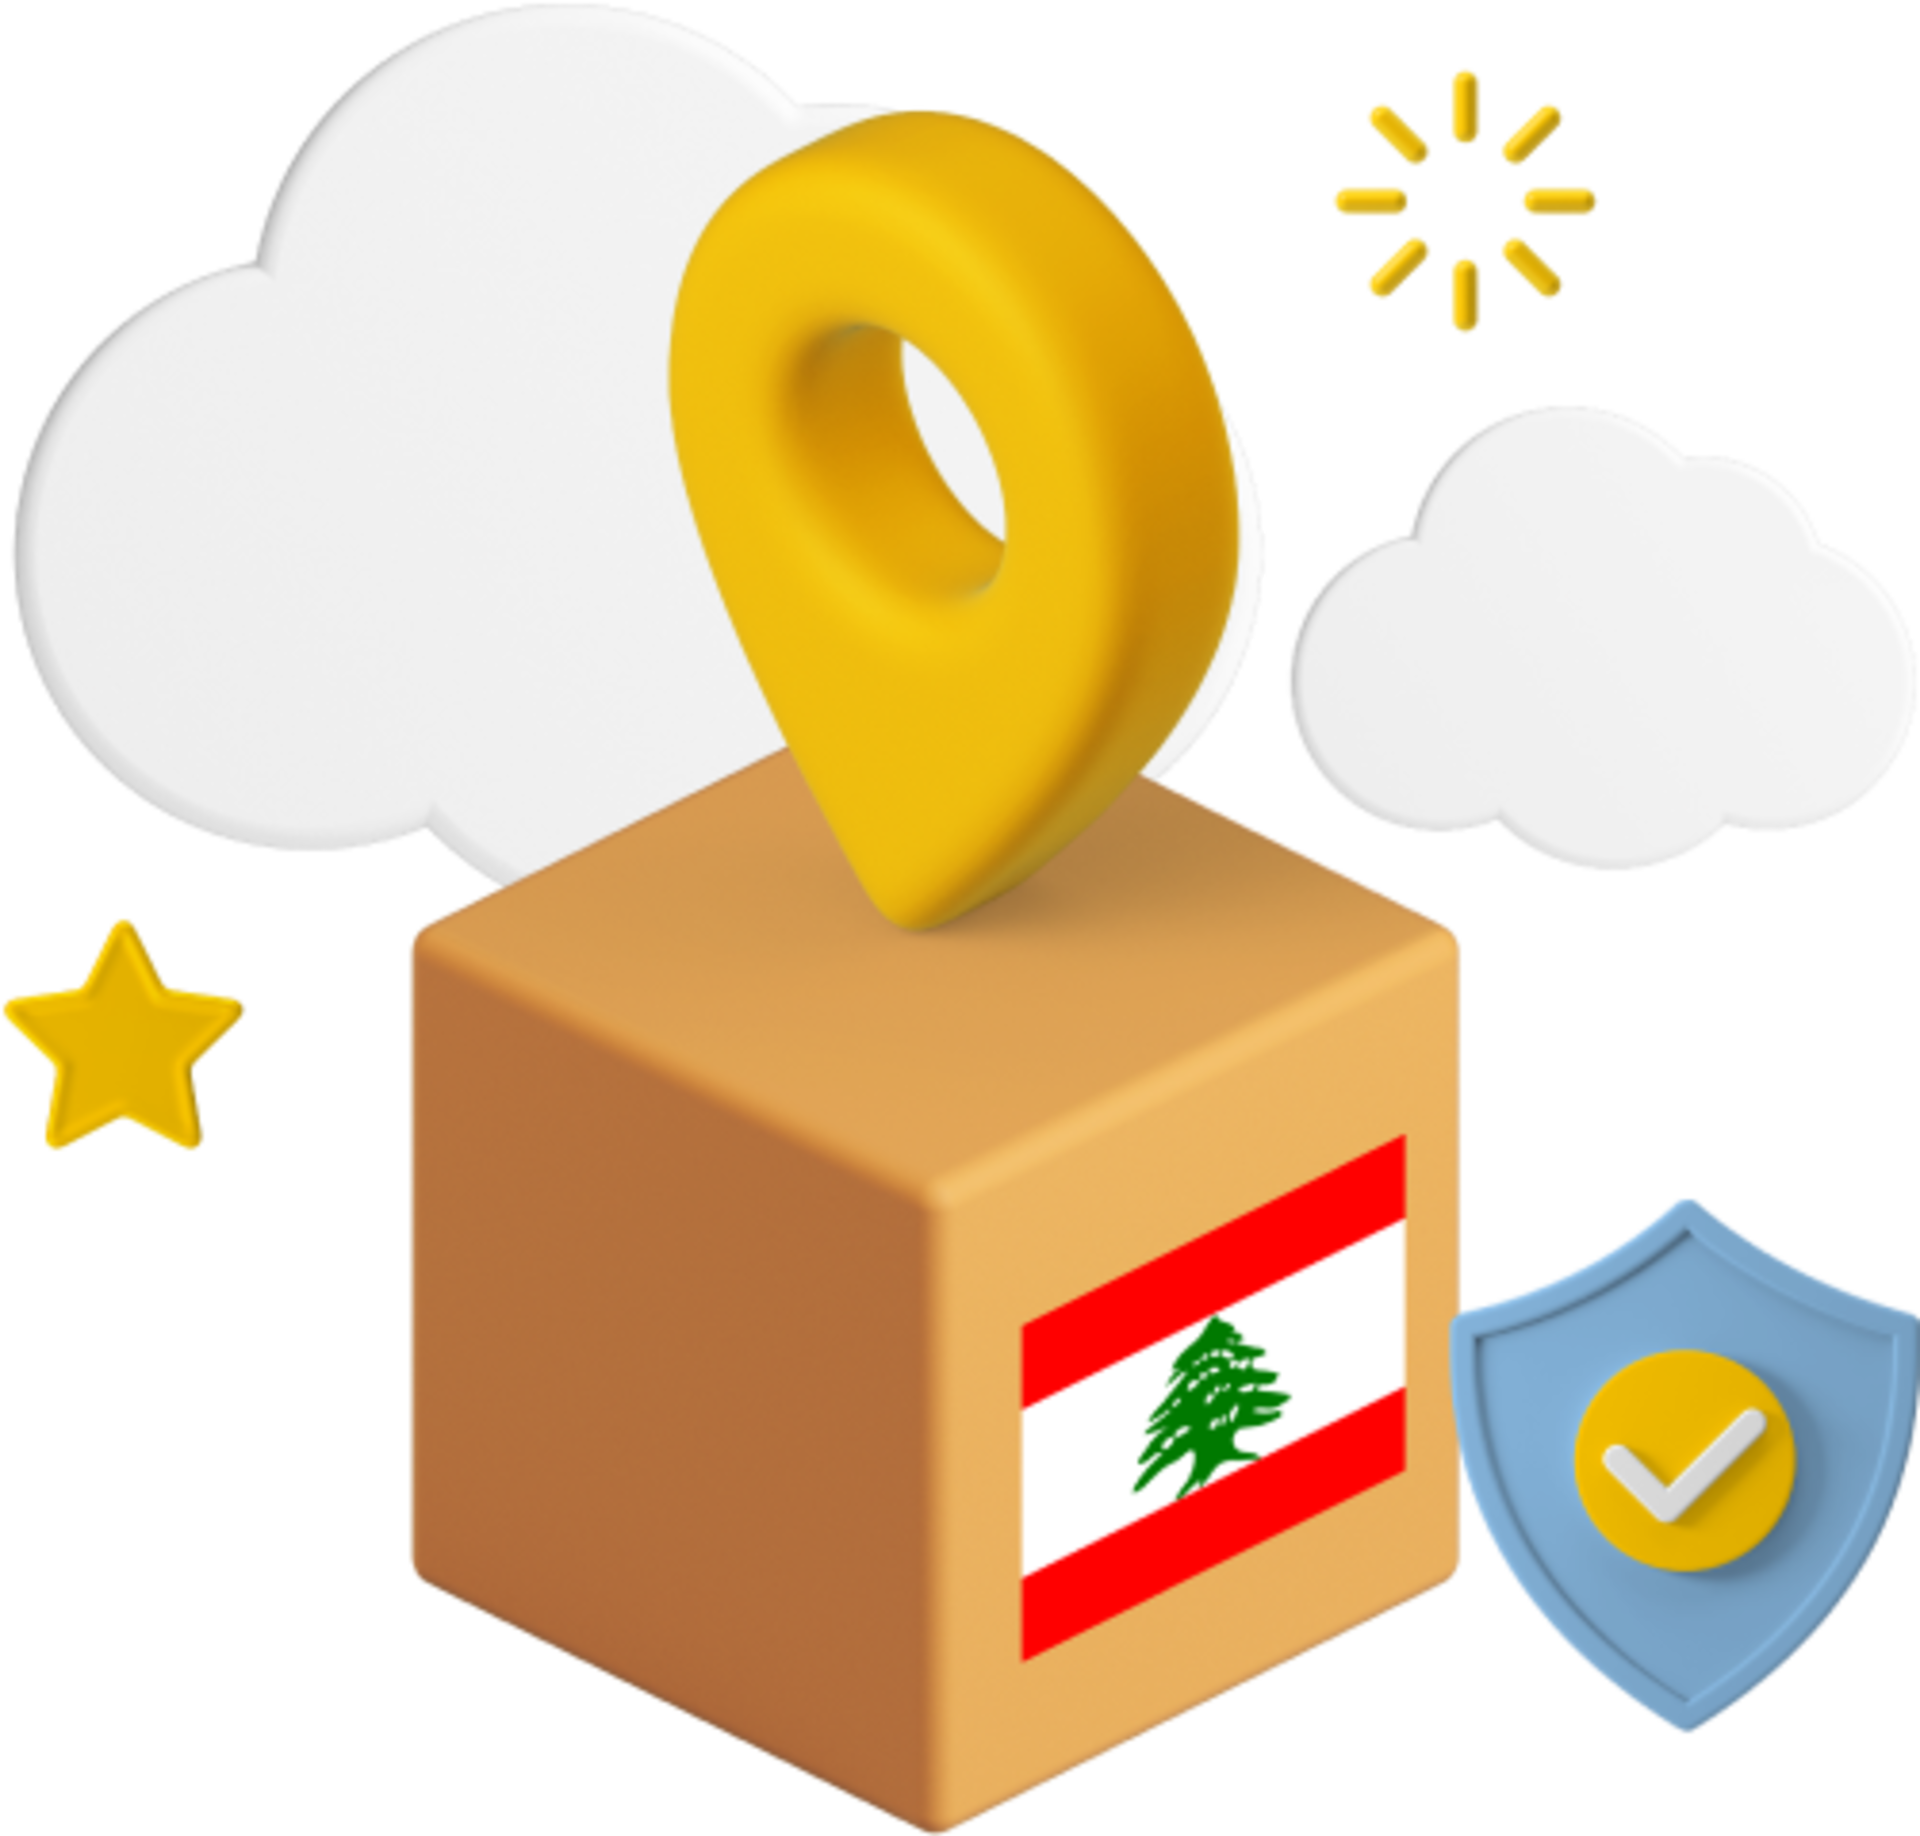 Lebanon flag on box with large location icon 